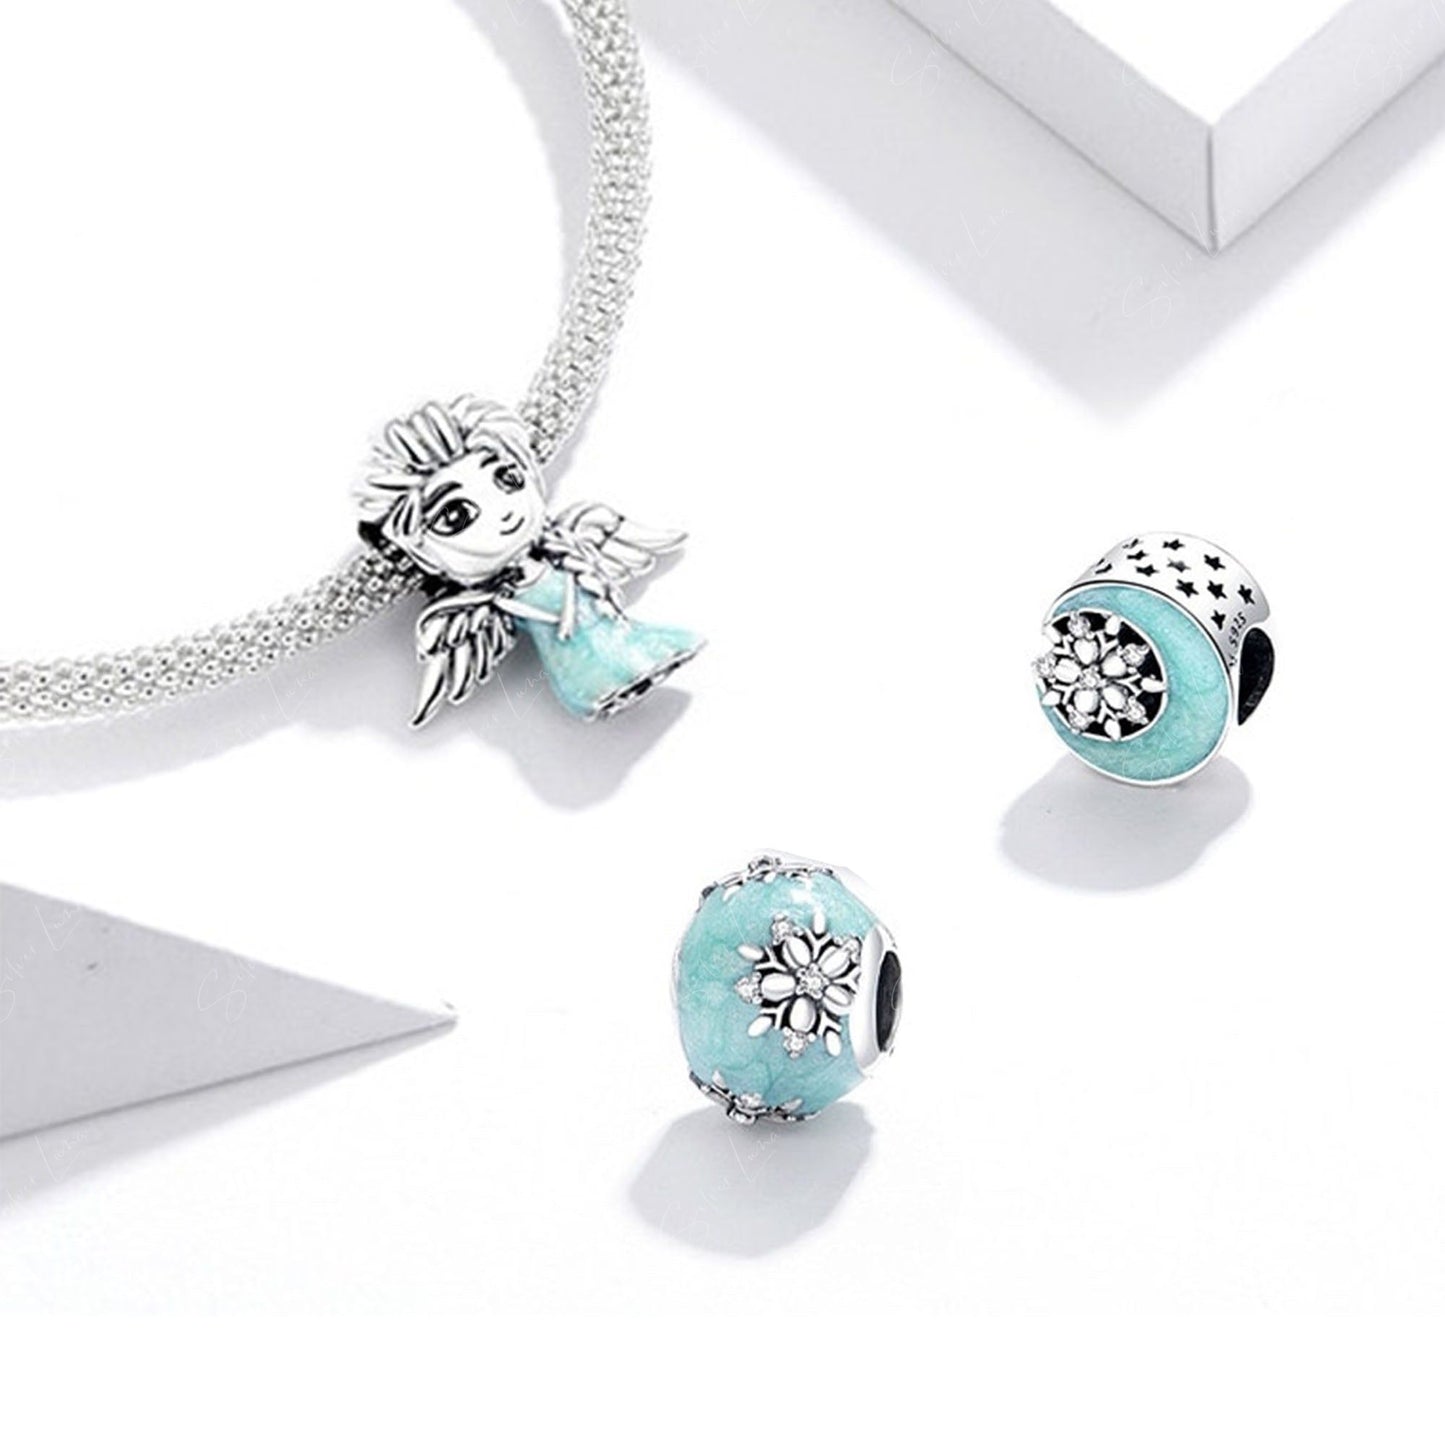 Snow angel charm bead for bracelet